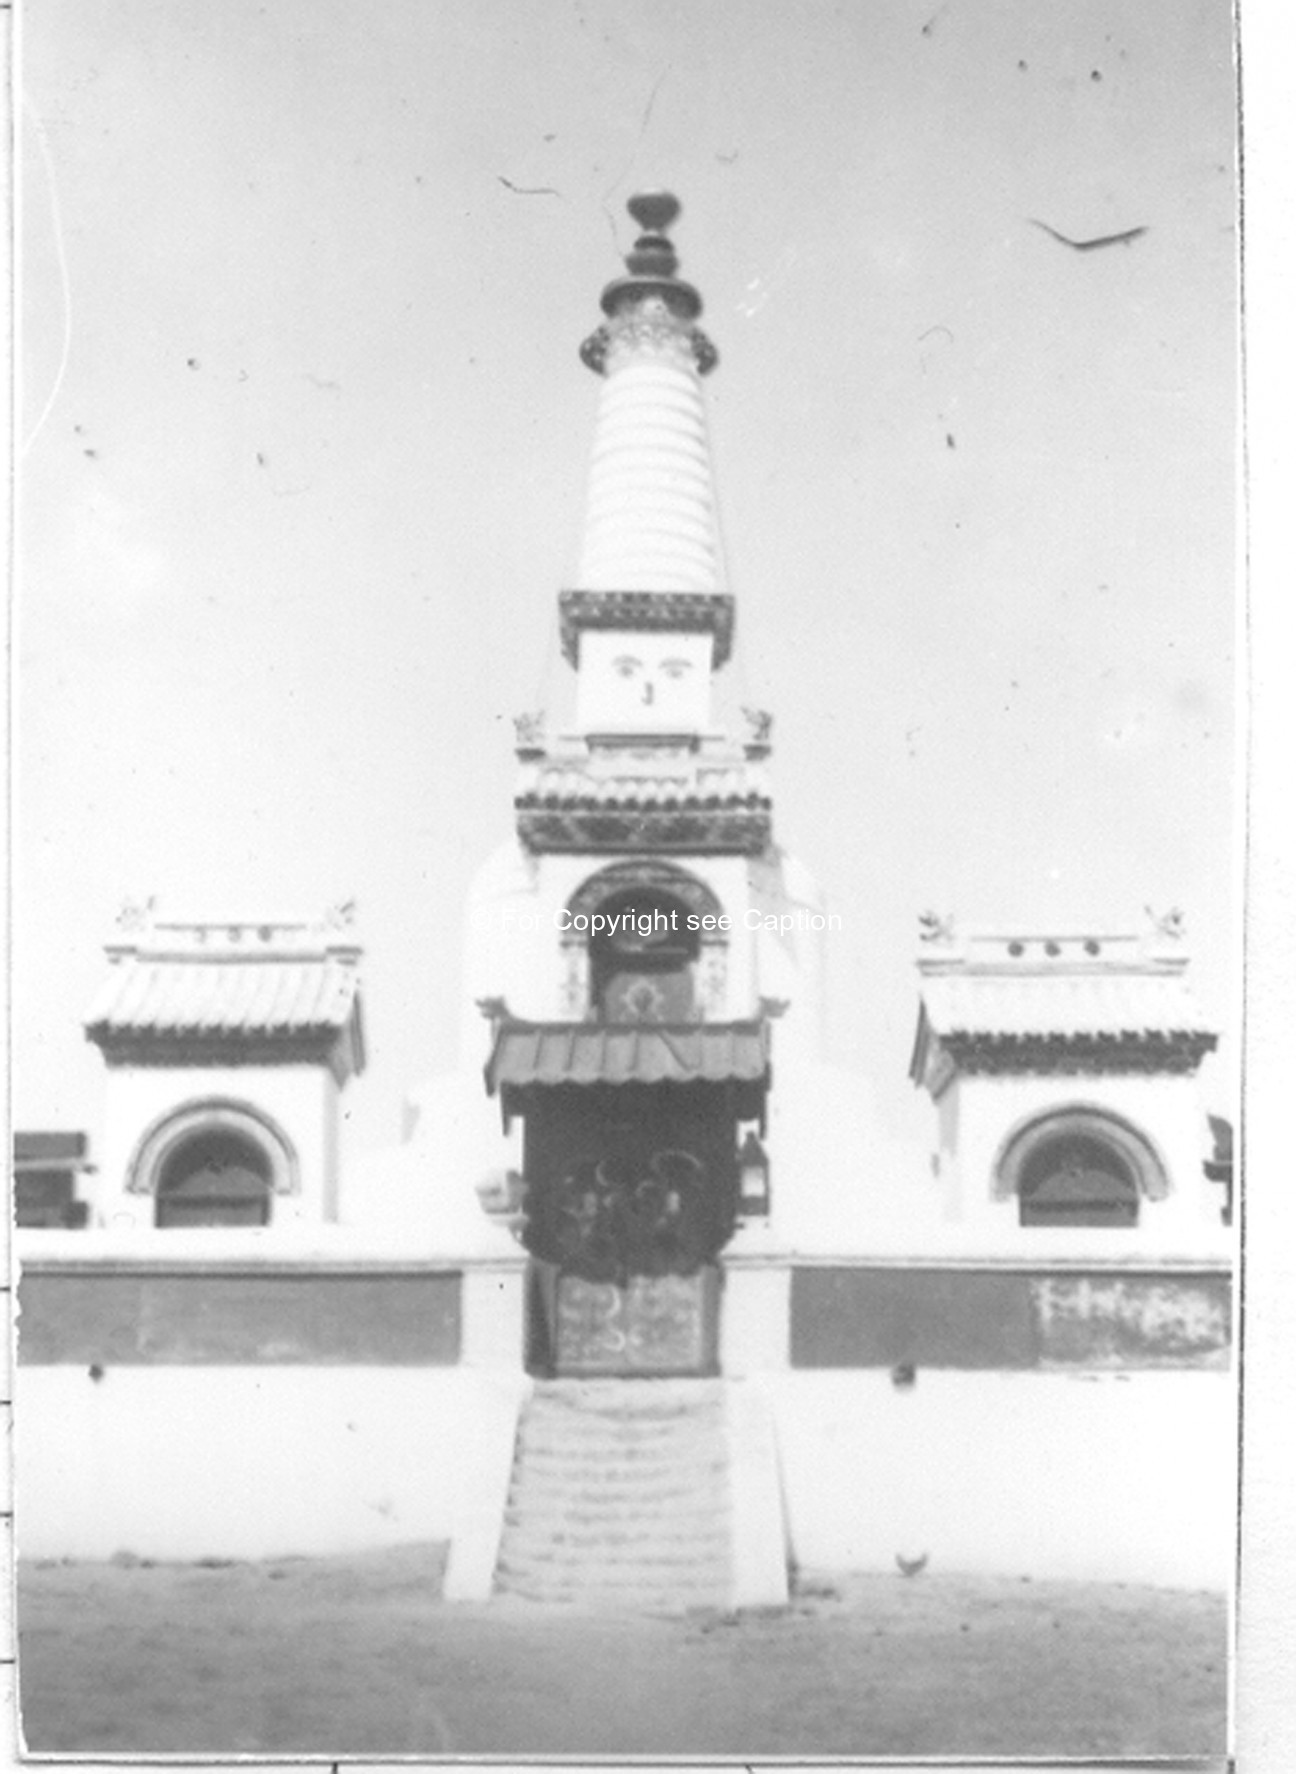 Jarankhashar stupa. Film Archives K-24703; Tsültem, N., Mongolian Architecture. Ulaanbaatar 1988, 15